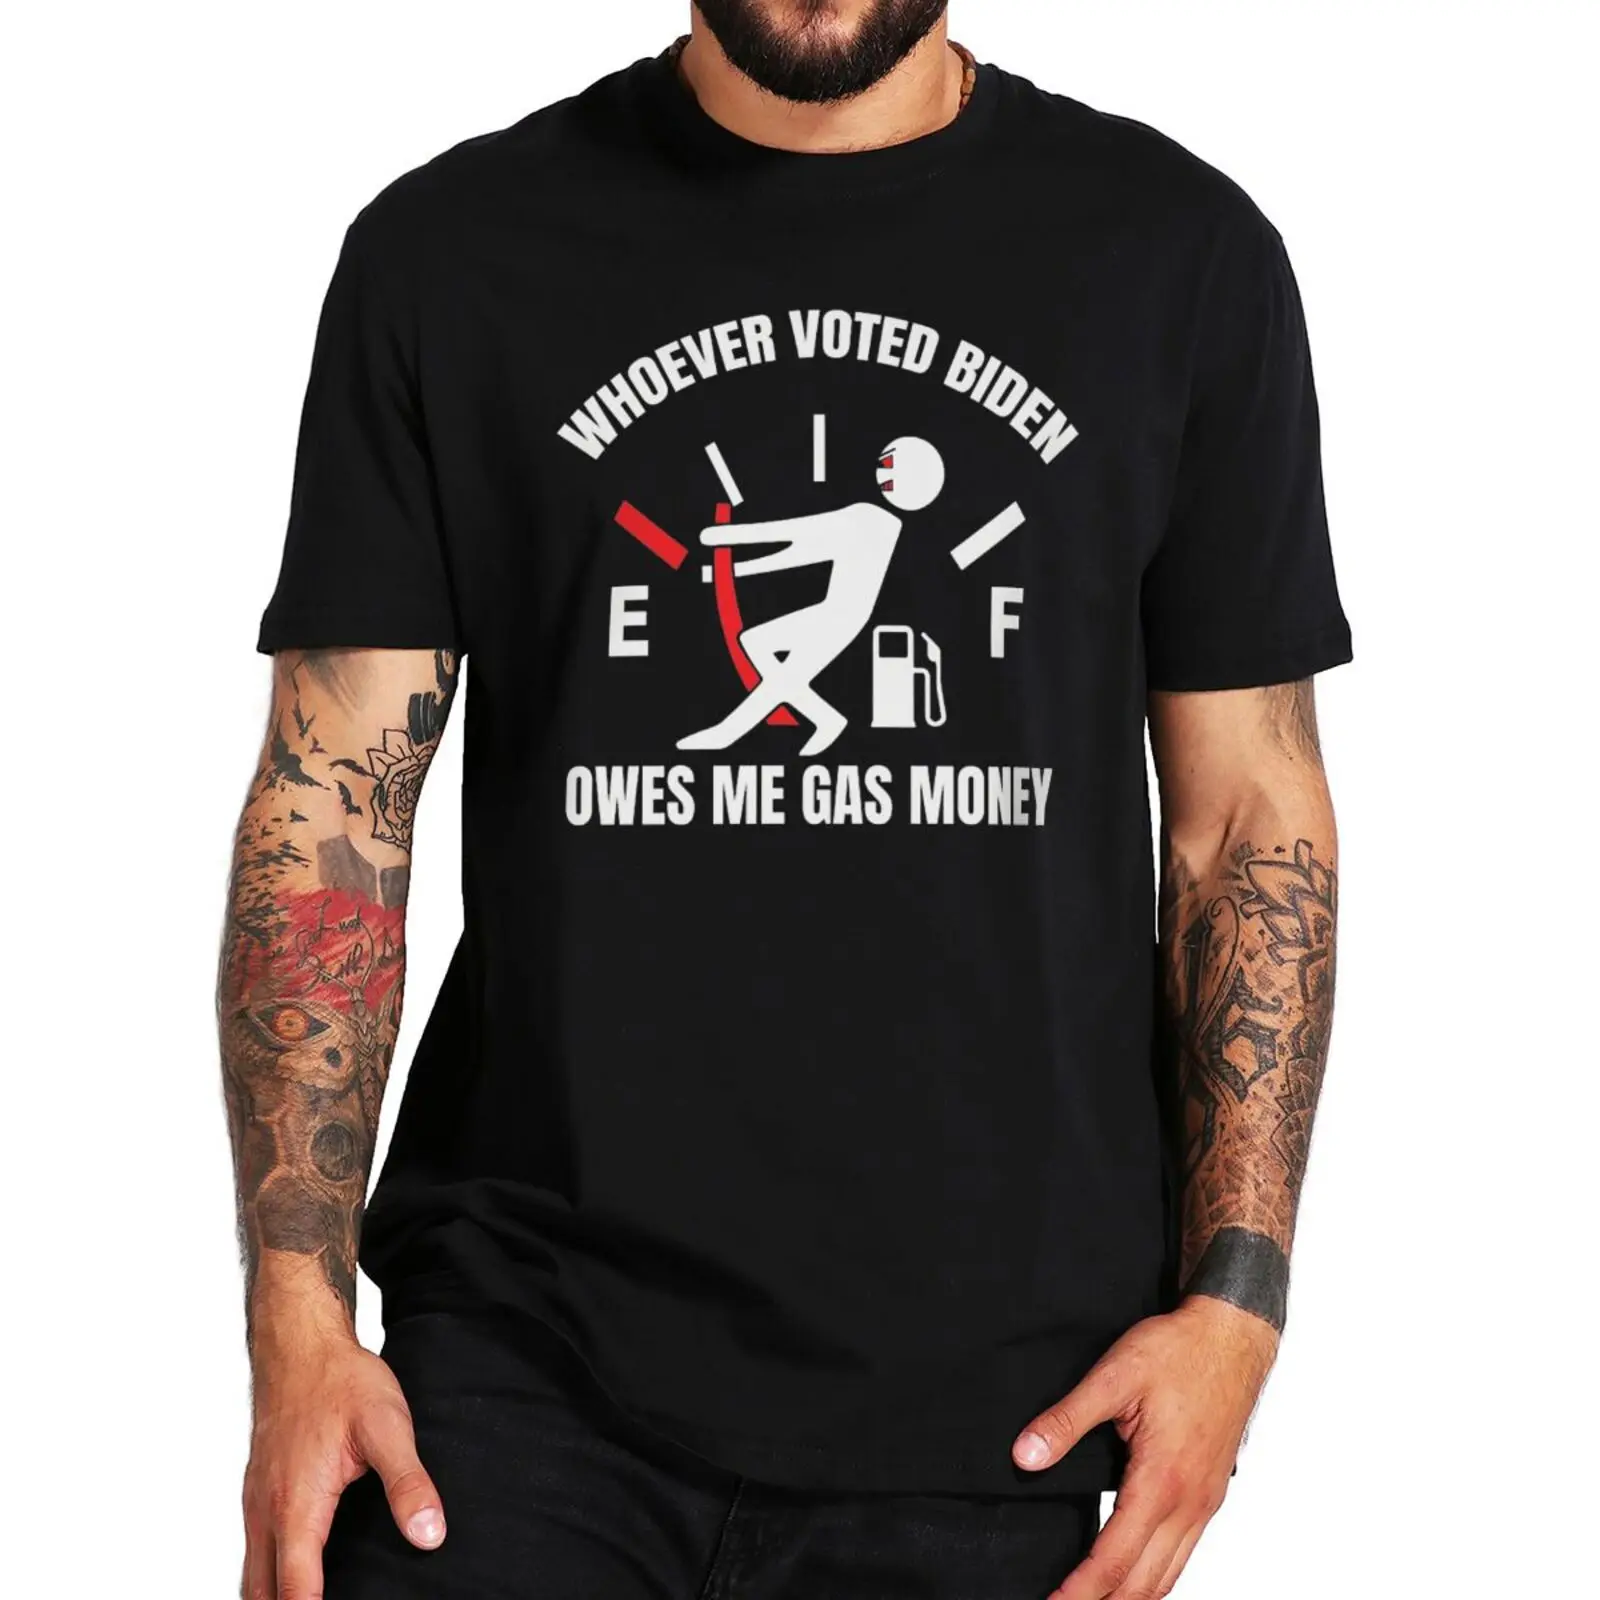 

Whoever Voted Biden Owes Me Gas Money T-Shirt Anti Biden Funny Memes Tee Top Premium 100% Cotton Soft Men's T Shirt EU Size